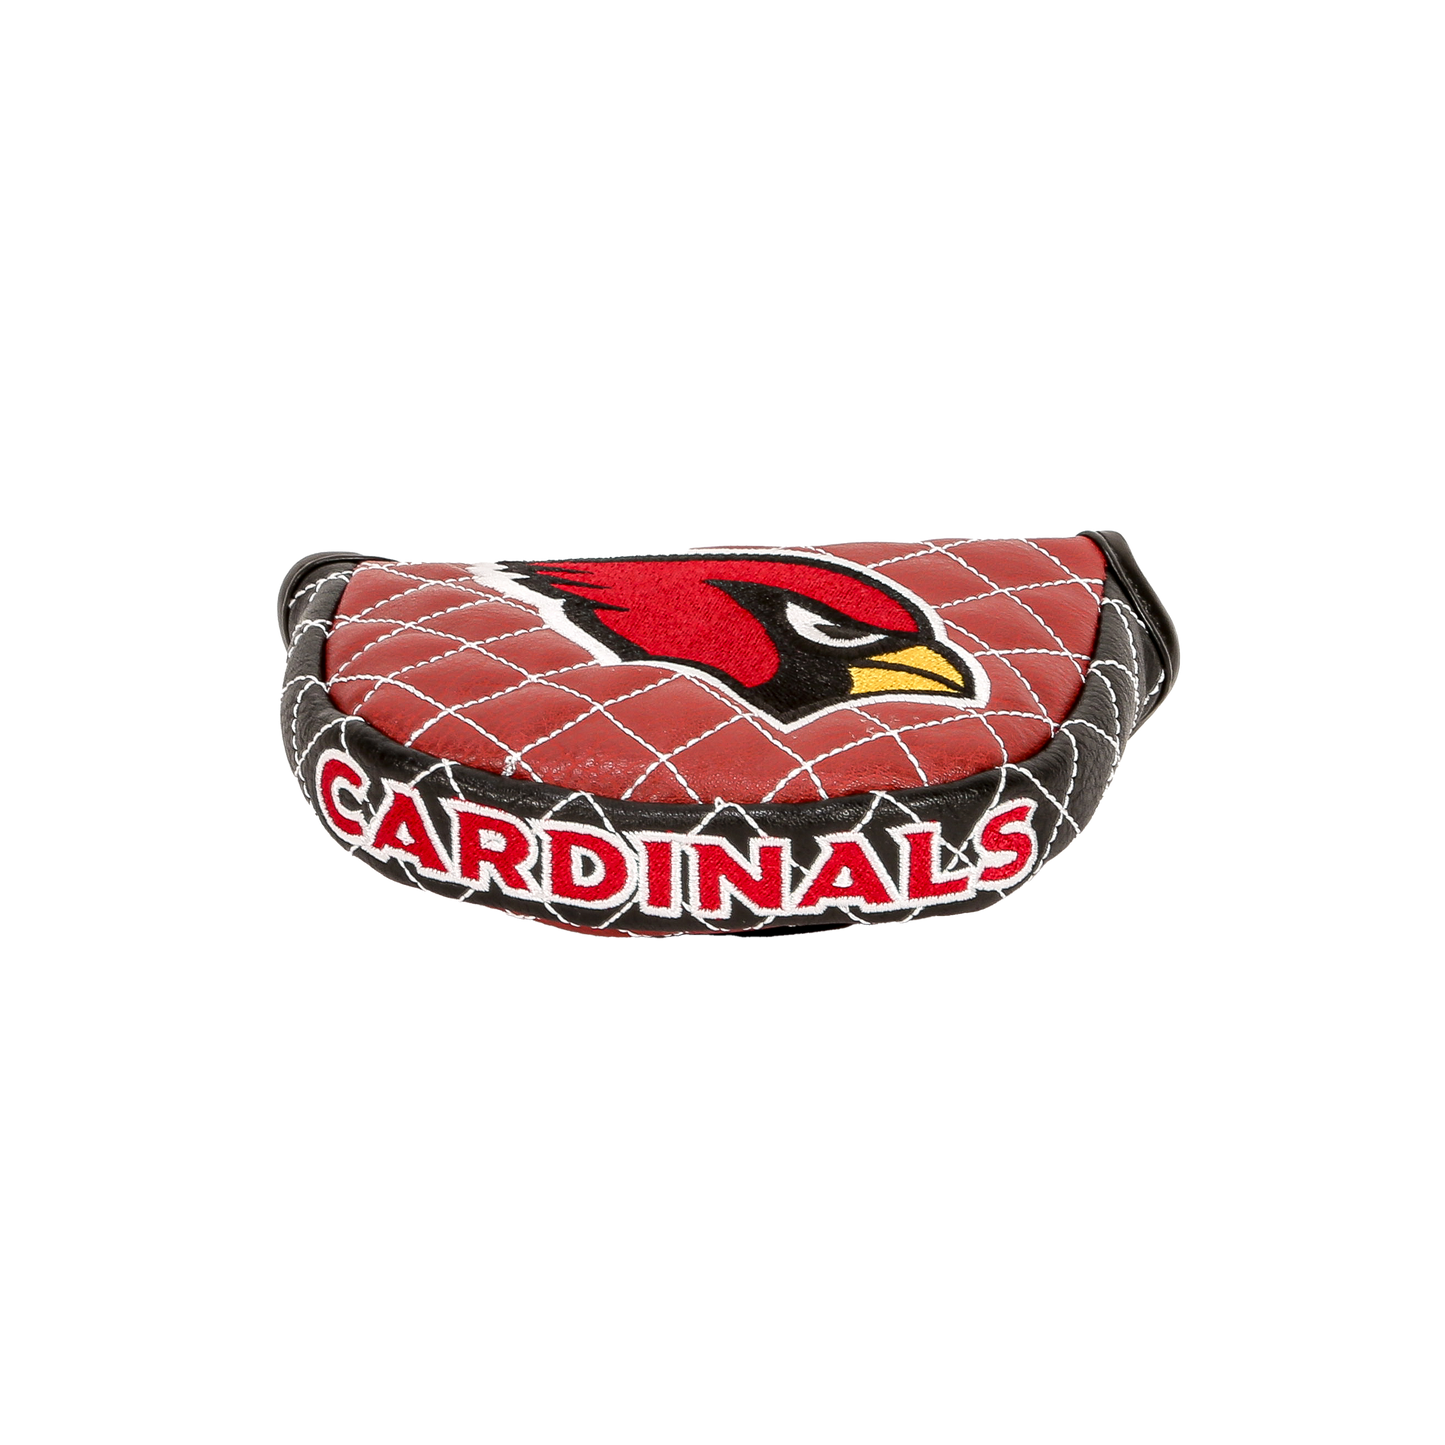 Arizona "Cardinals" Mallet Putter Cover